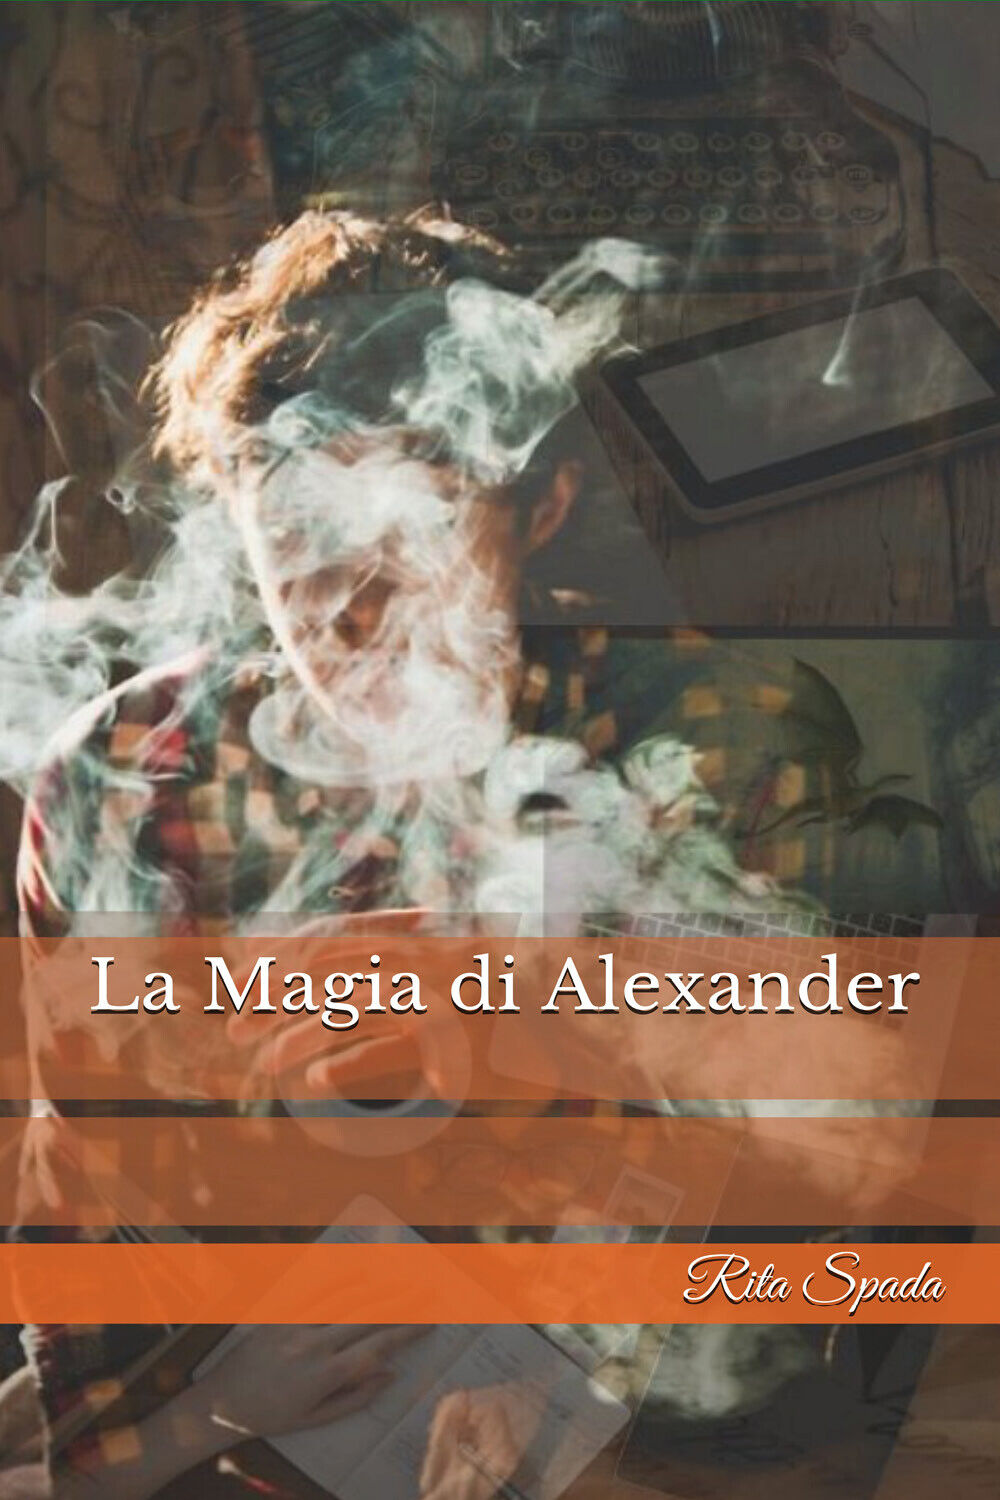 La magia di Alexander di Rita Spada,  2021,  Youcanprint libro usato